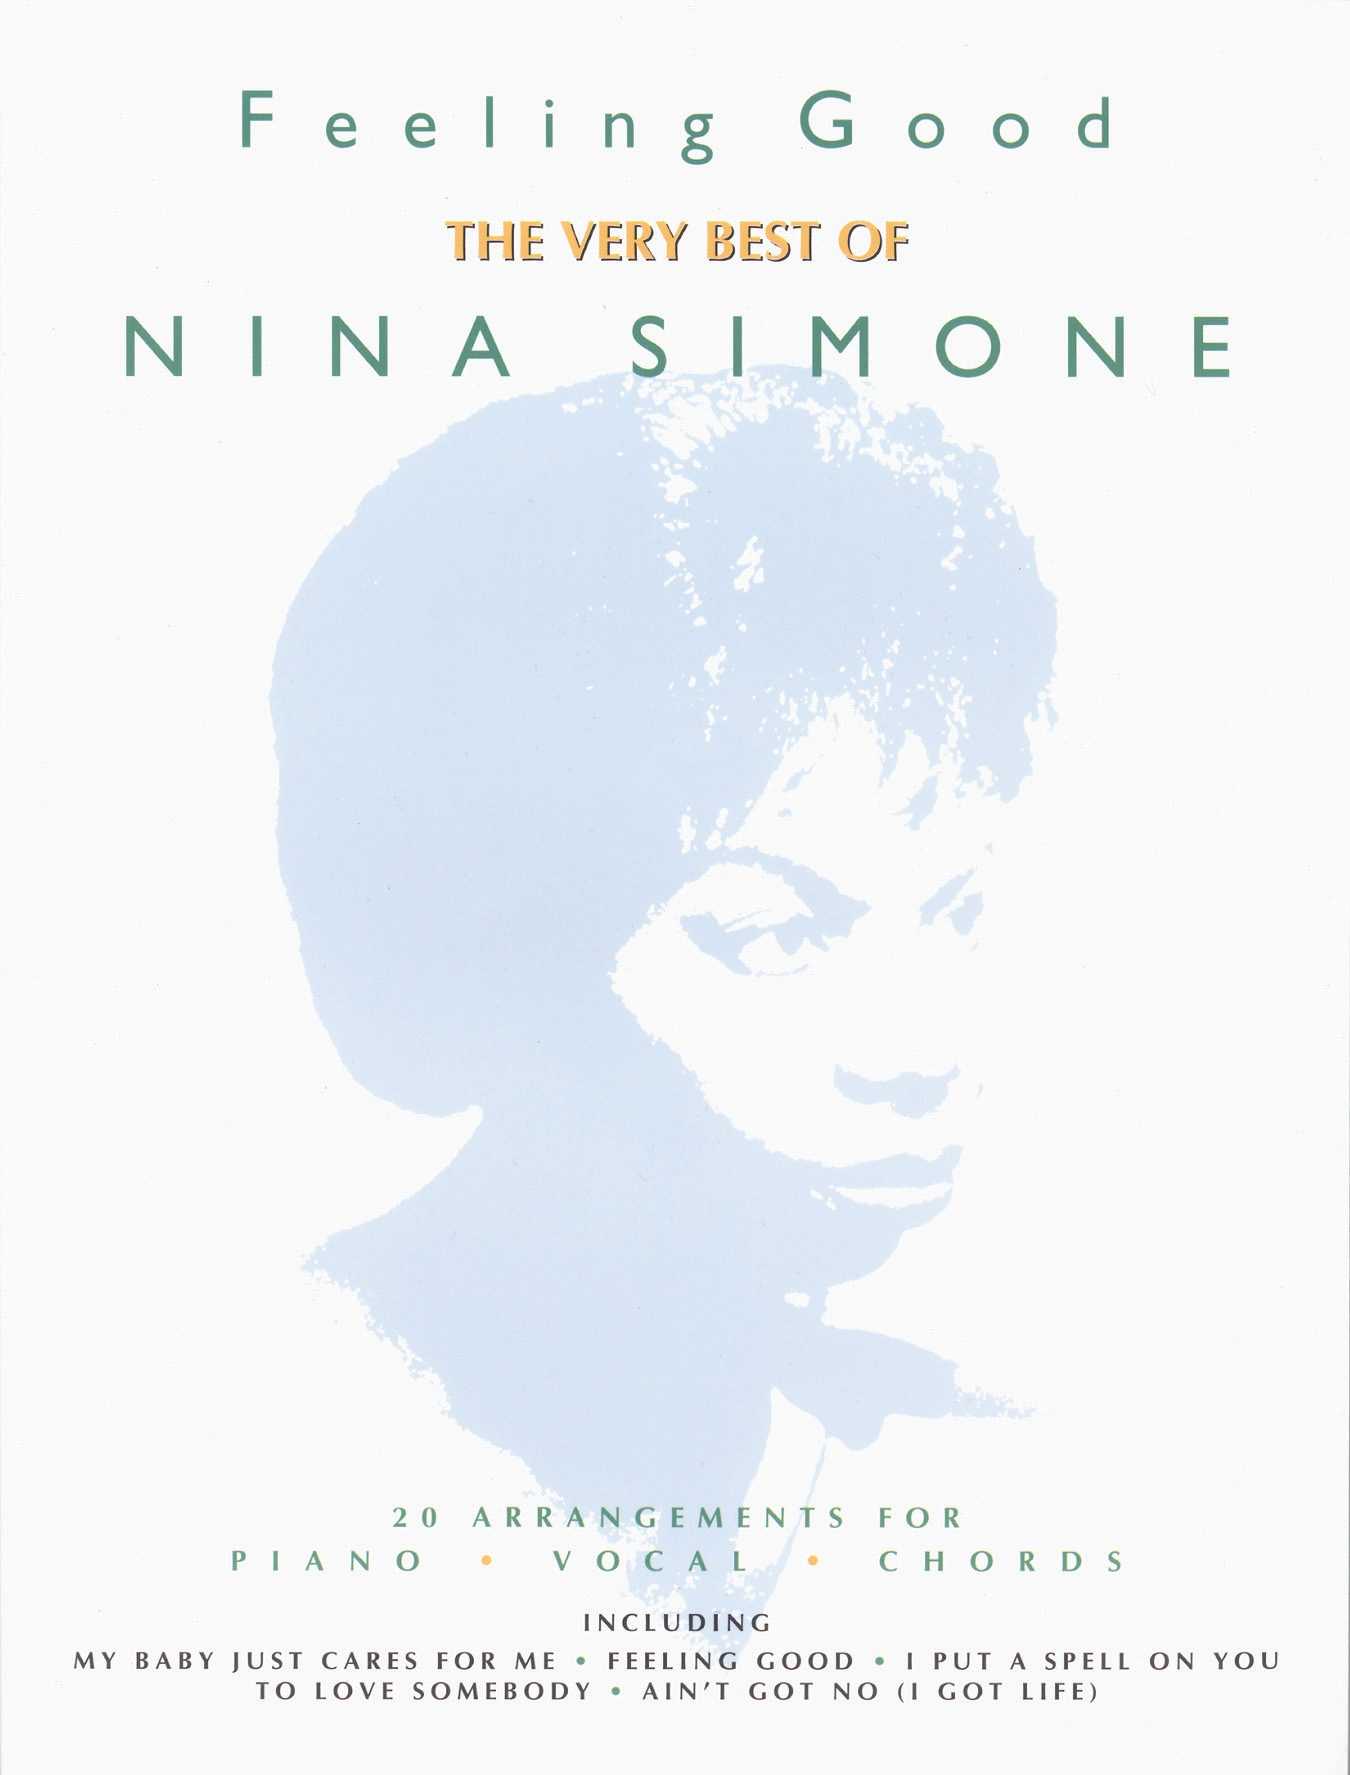 Feeling Good. The Very Best of Nina Simone 